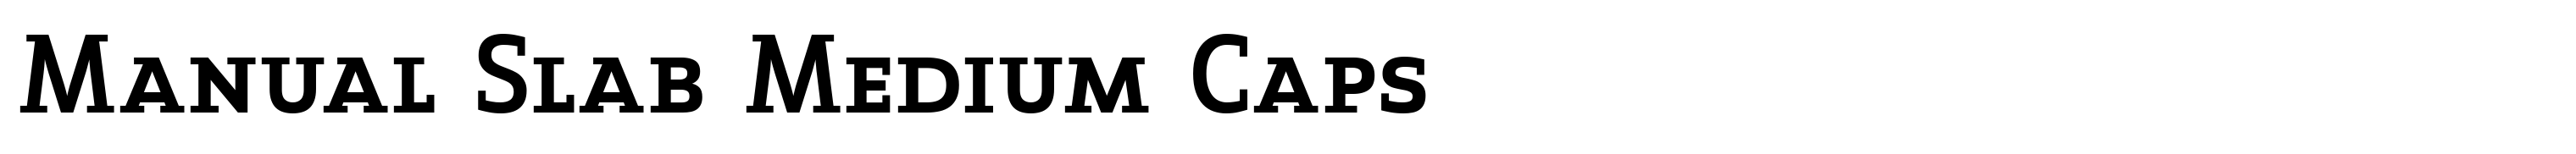 Manual Slab Medium Caps